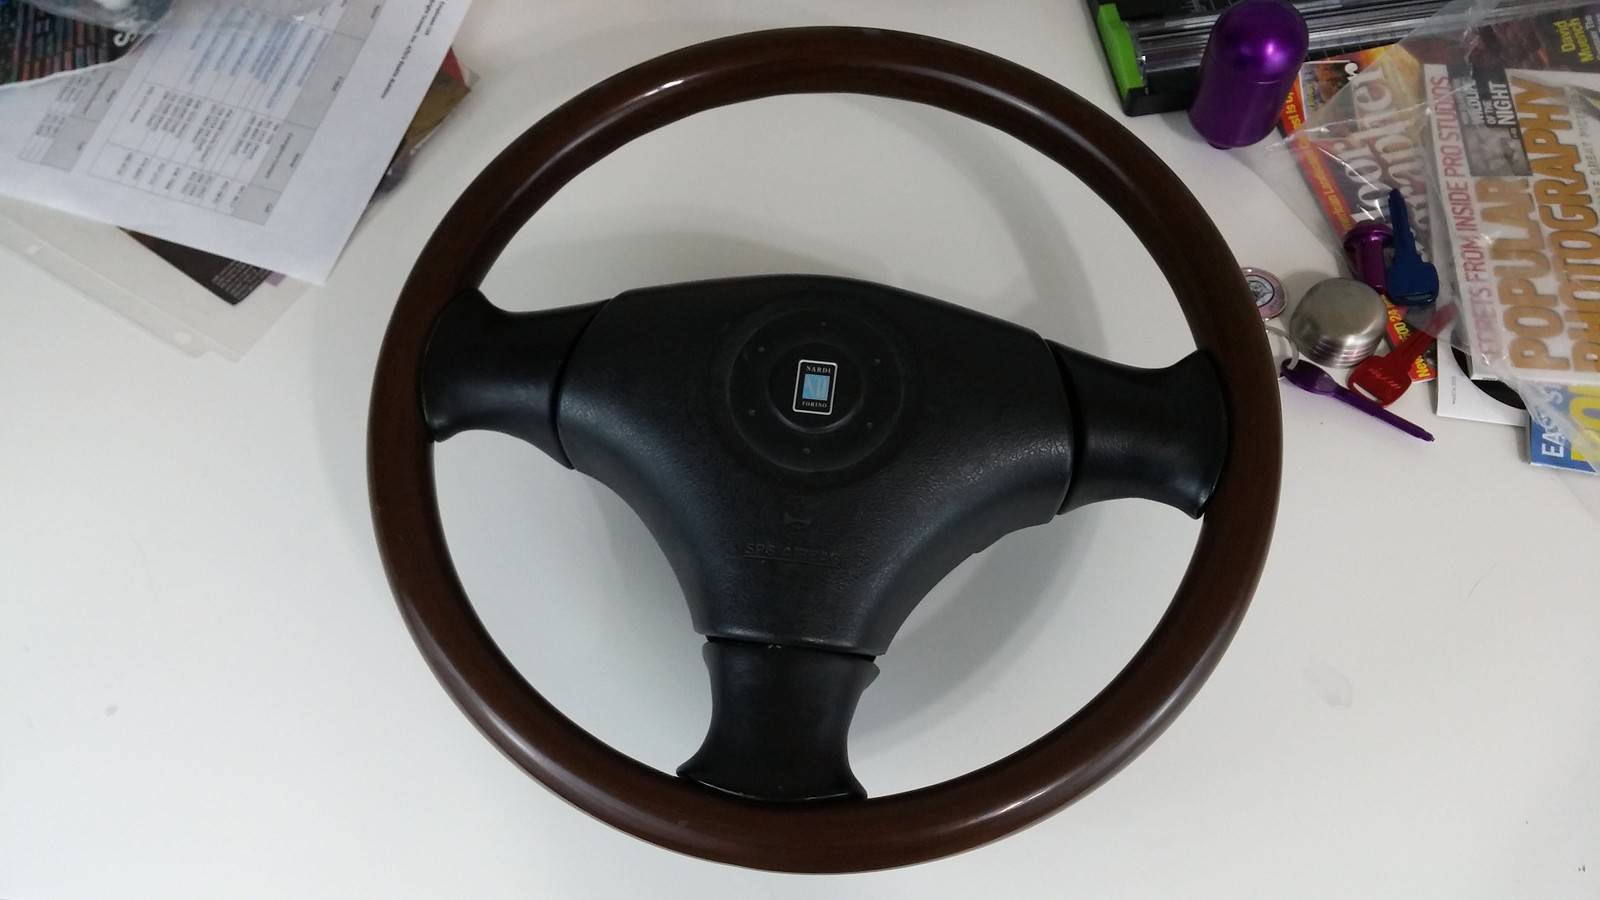 FS: Miata 2000 SE Nardi wood steering wheel $2018 